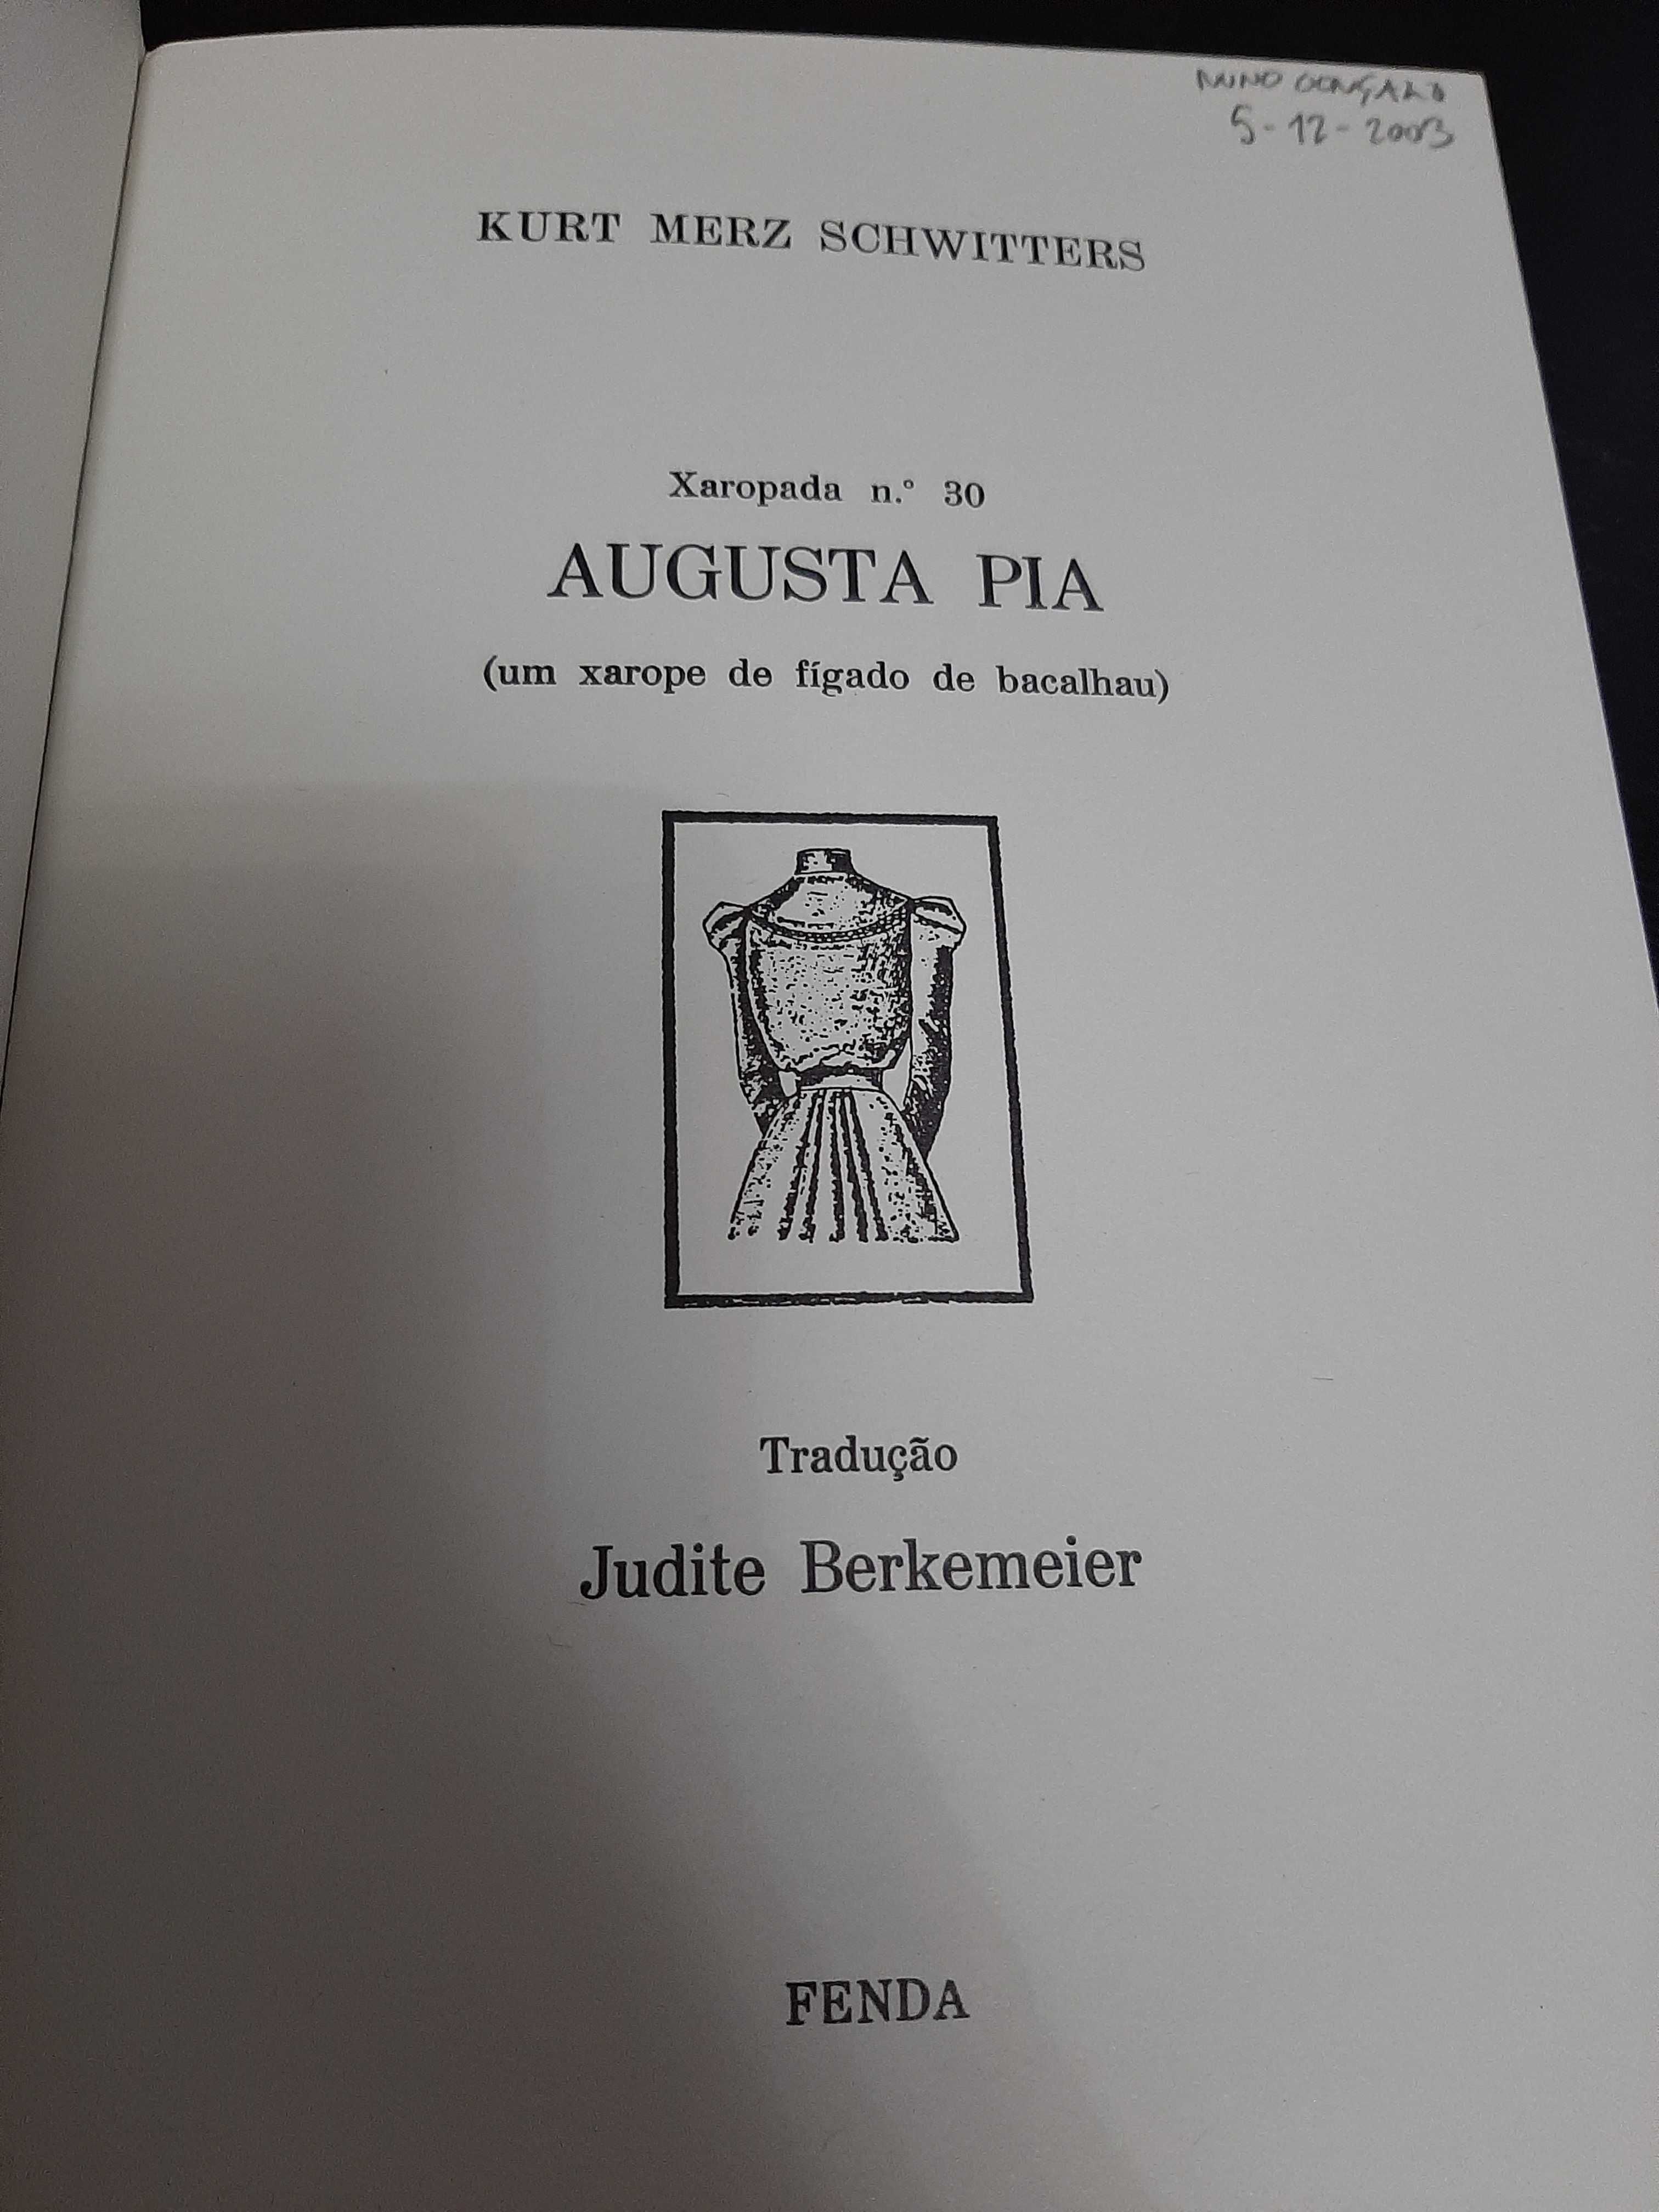 Kurt Schwitters - Ausgusta Pia - Fenda